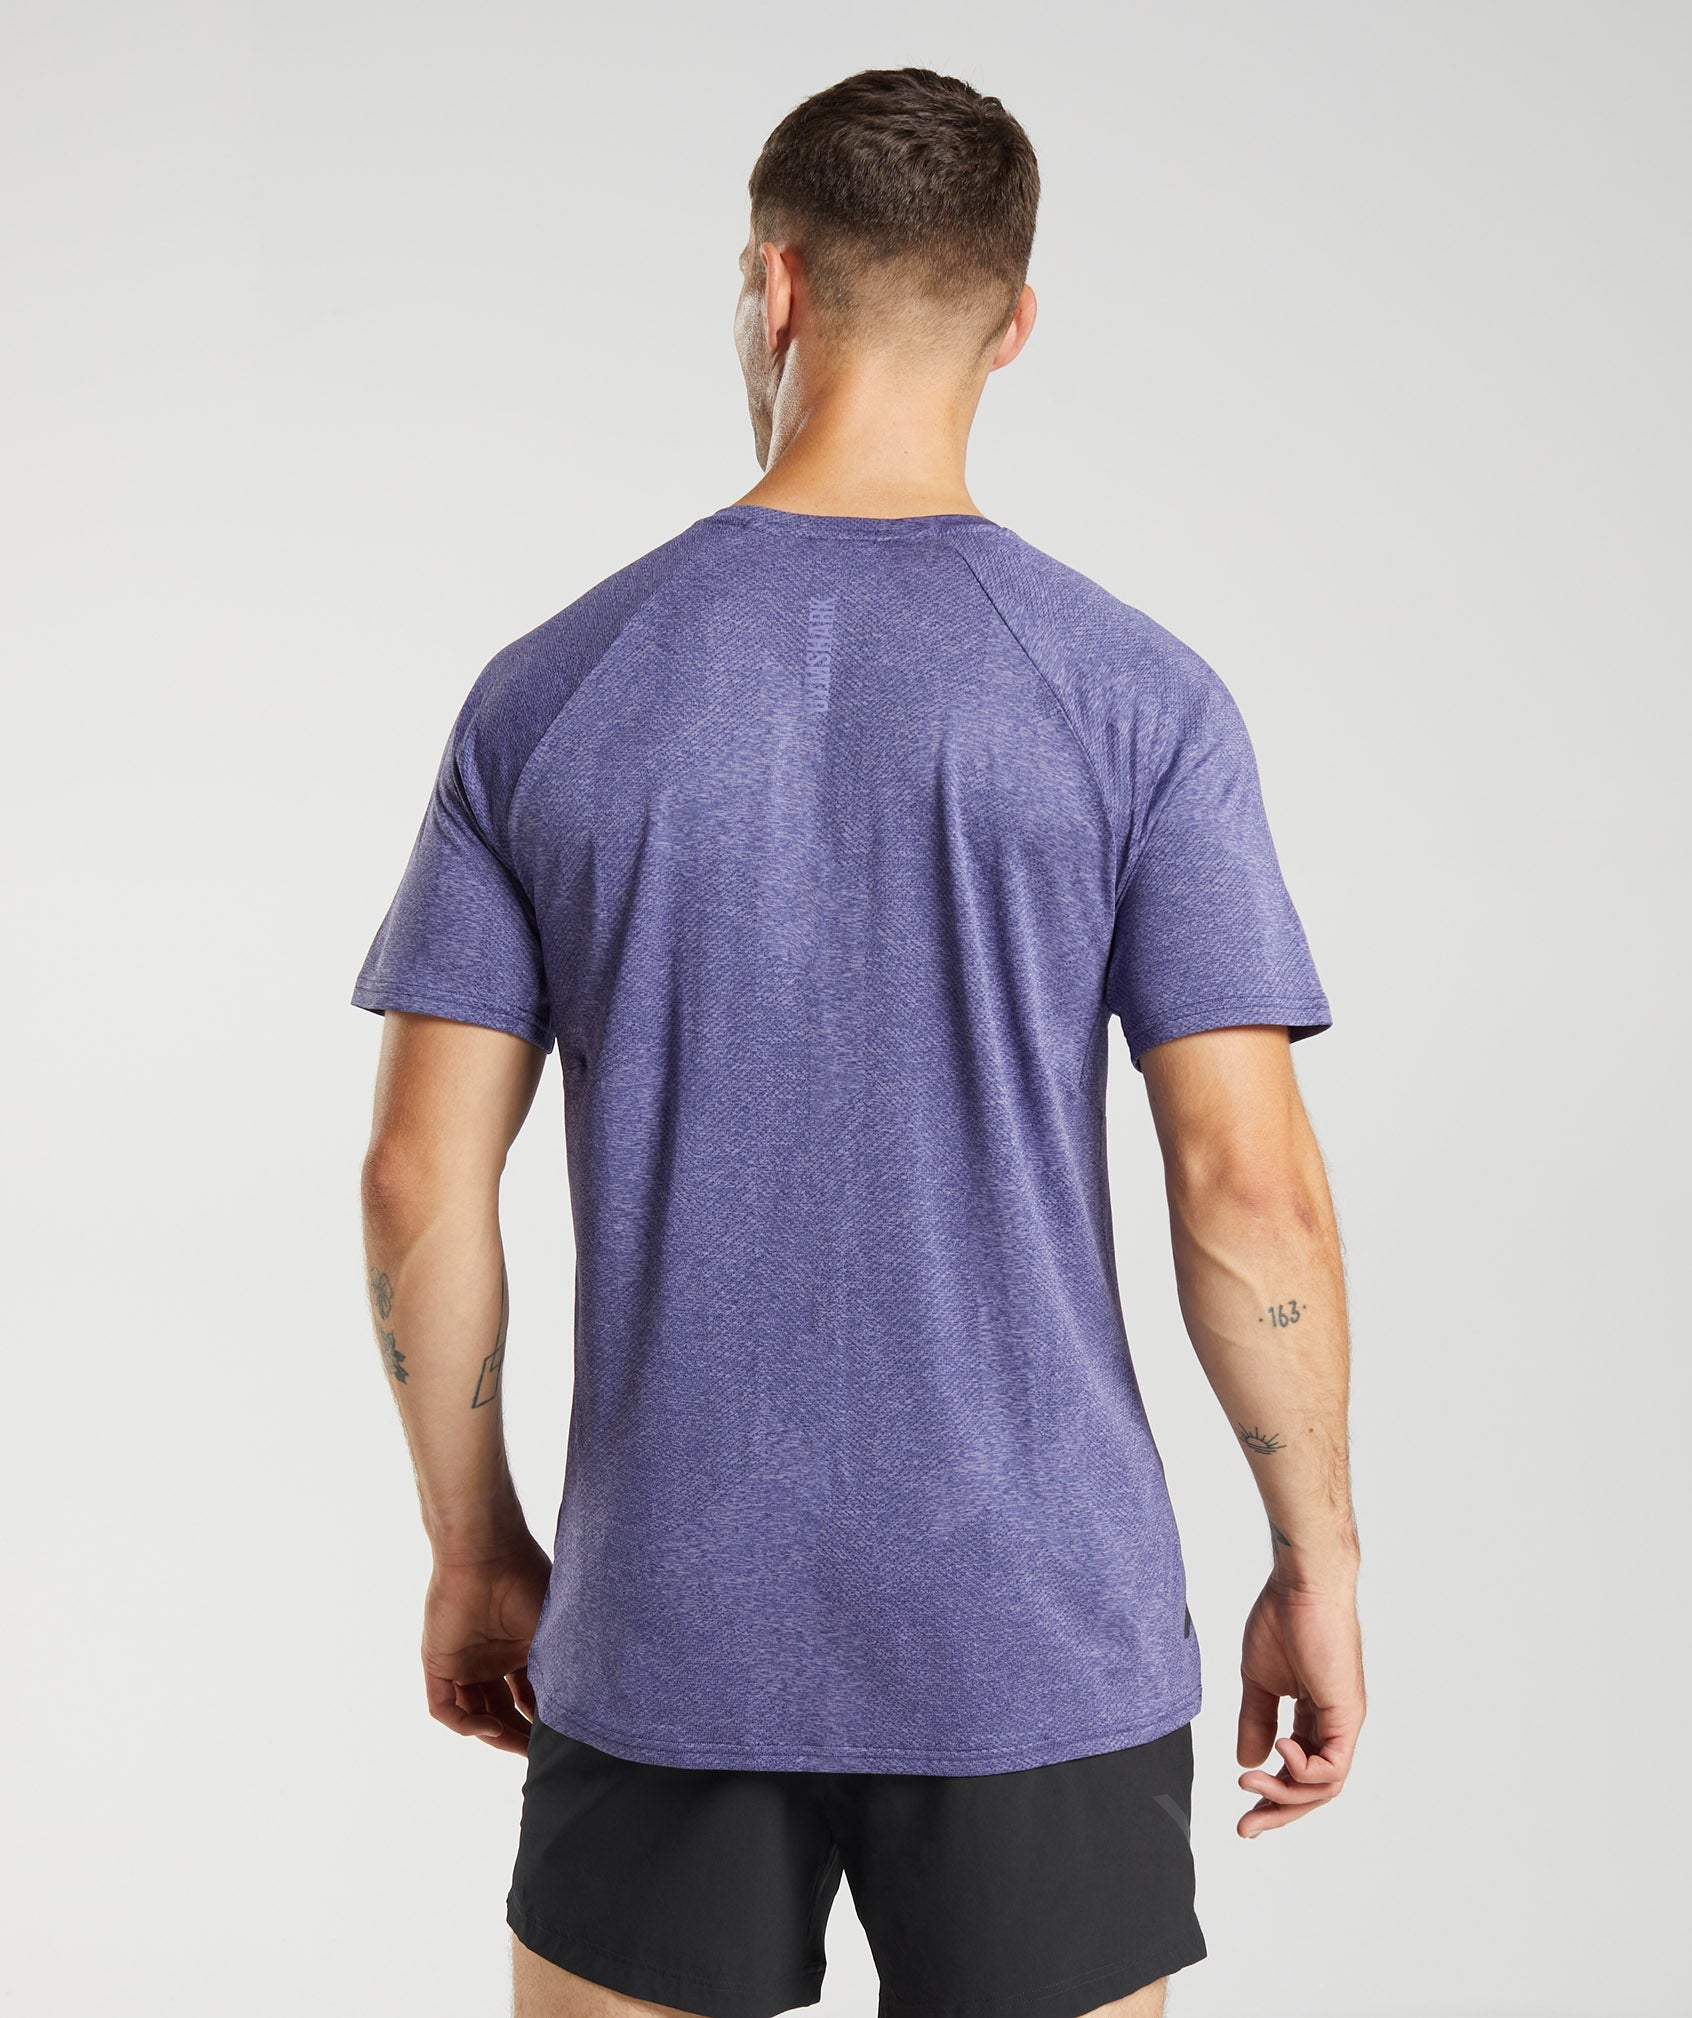 Apex T-Shirt in Neptune Purple/Velvet Purple - view 2